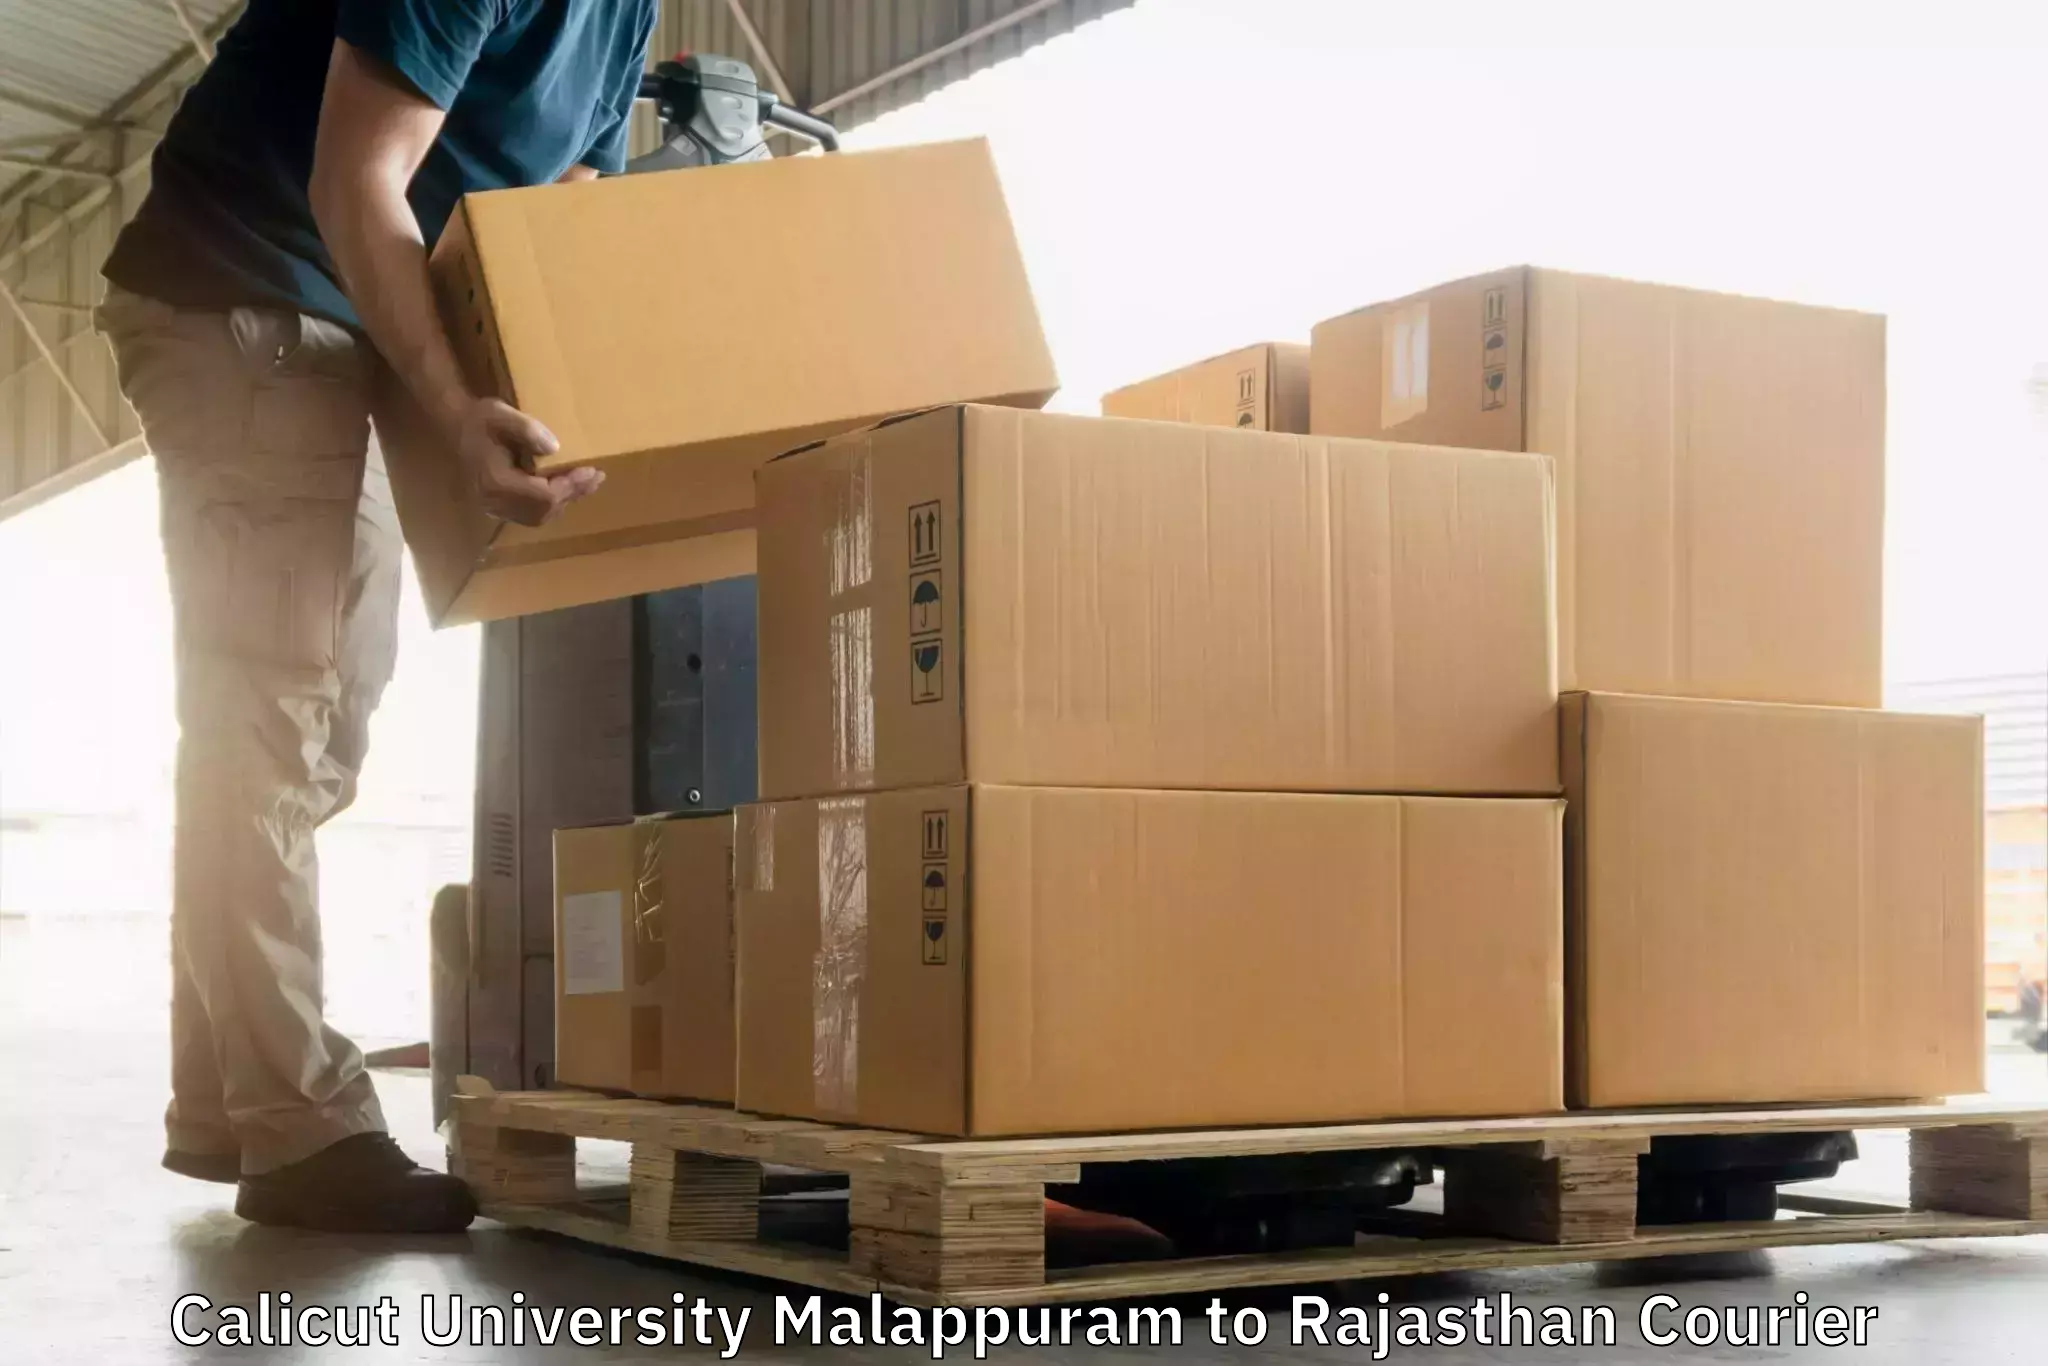 International parcel service Calicut University Malappuram to Rajasthan